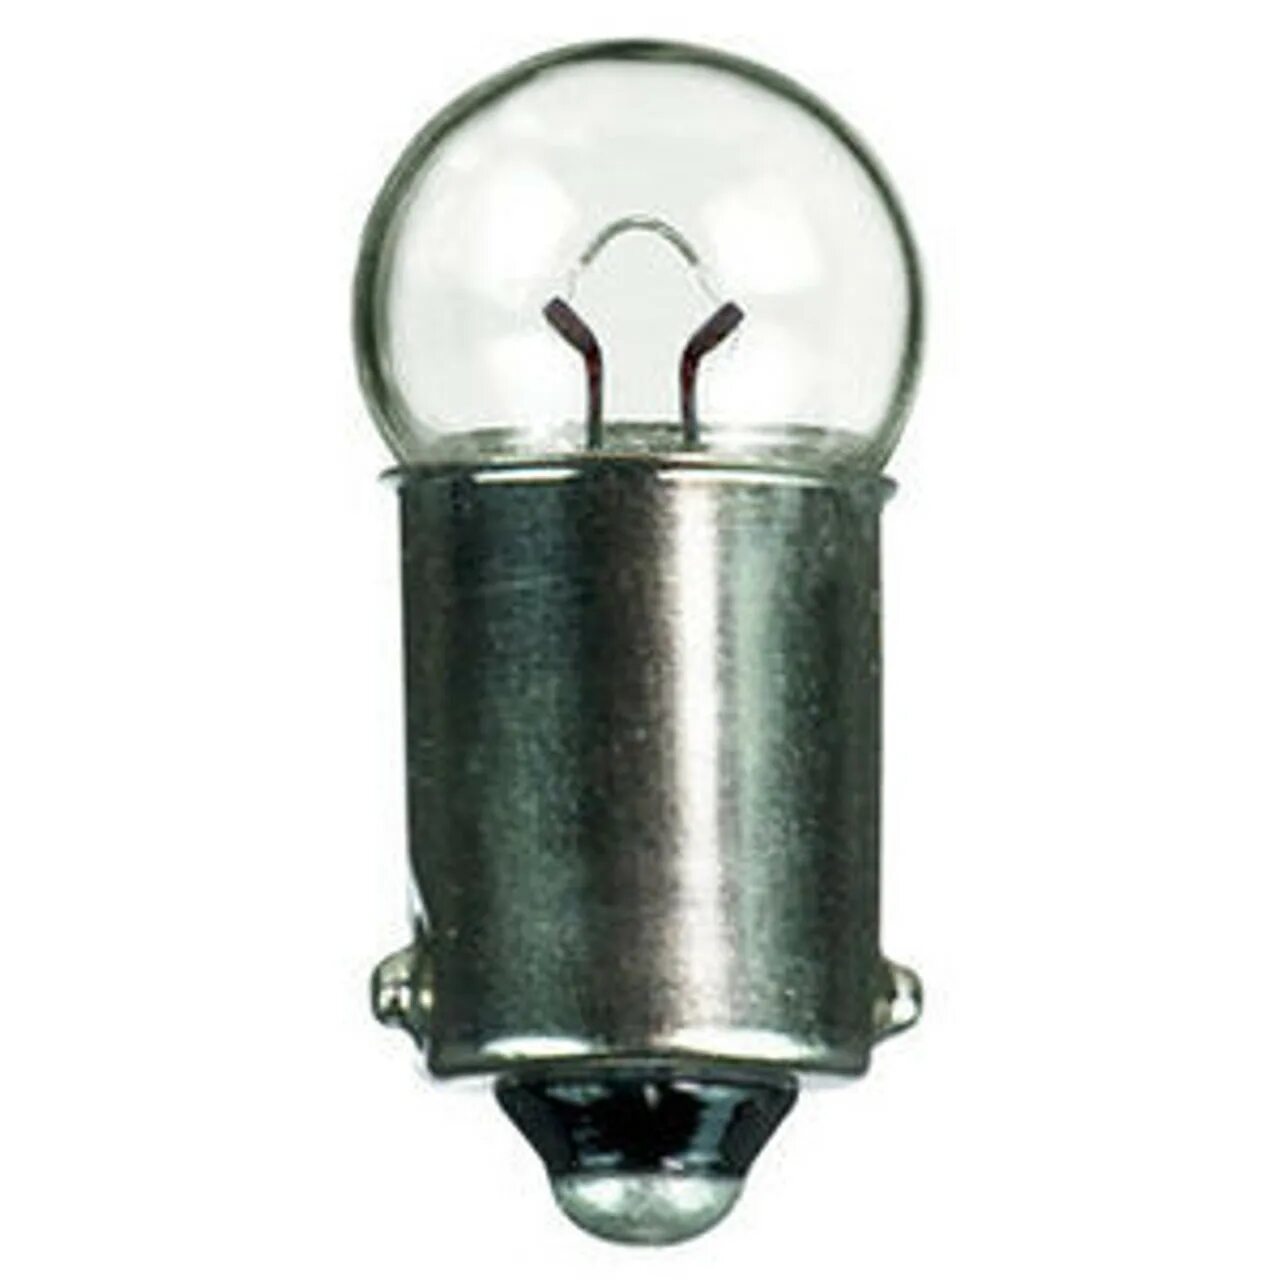 Лампочка байонетная ba9s 30bdc. Лампа миниатюрная штифтовой цоколь байонет. Лампа накаливания с байонетным цоколем ba20d 130 вольт. Лампа миниатюрная 28 вольт цоколь=MG5.7S/9.